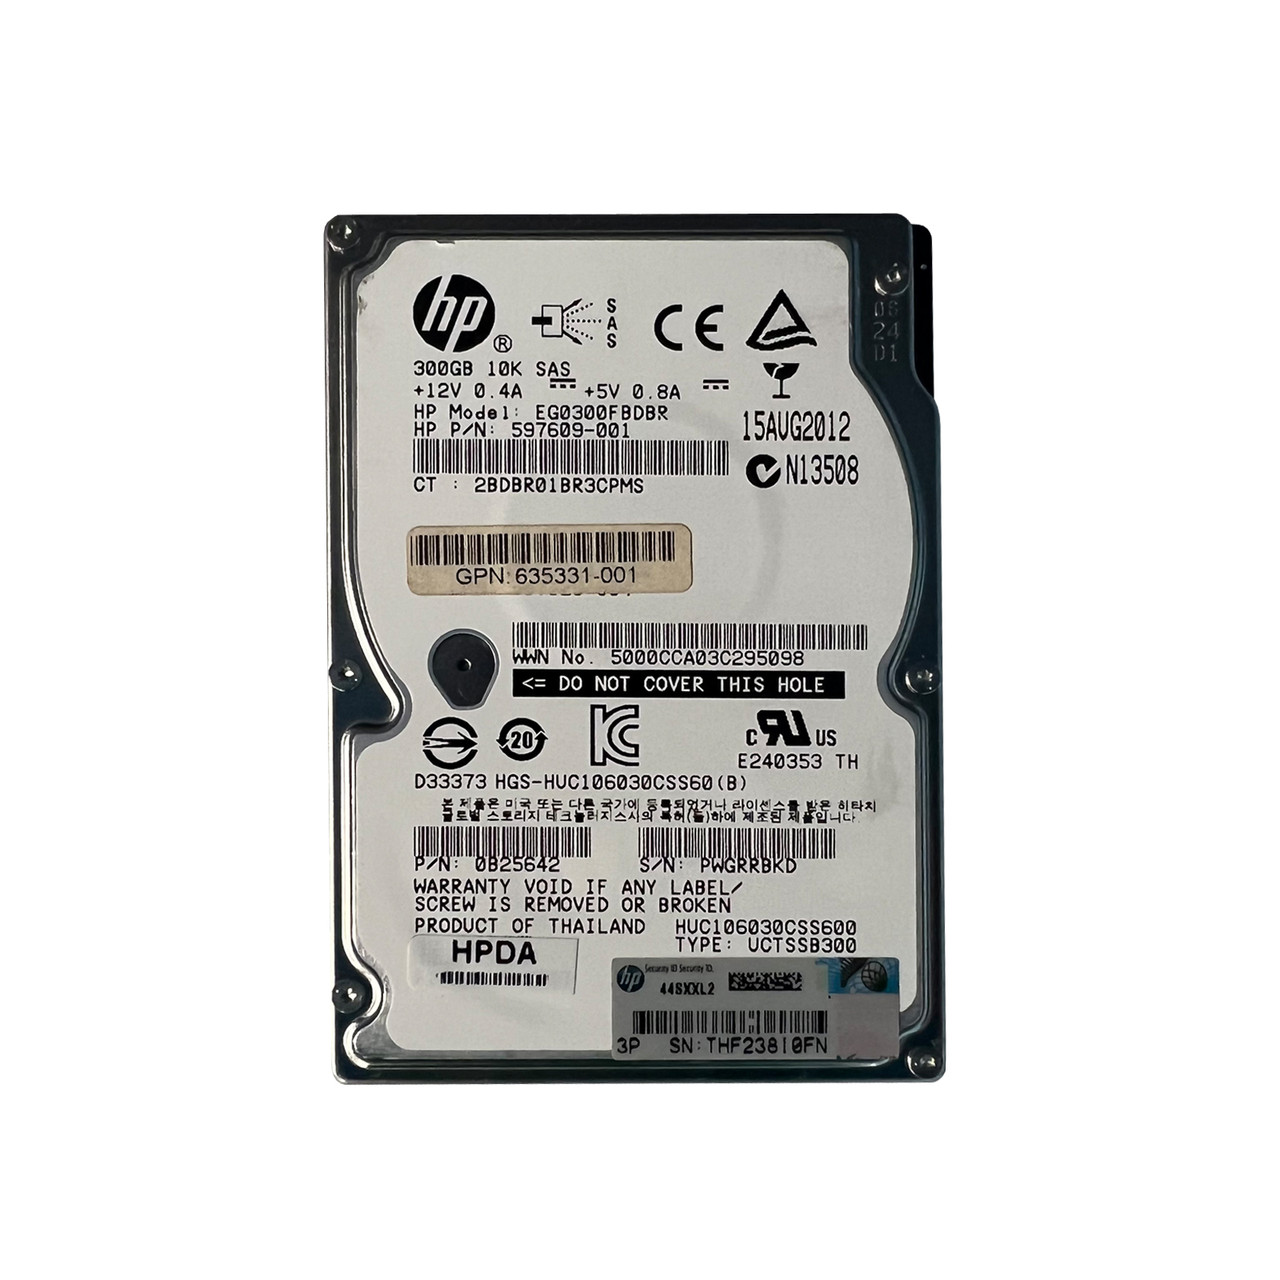 HP 597609-001 300GB SAS 10K 6GBPS 2.5" Hot Plug EG0300FBDBR